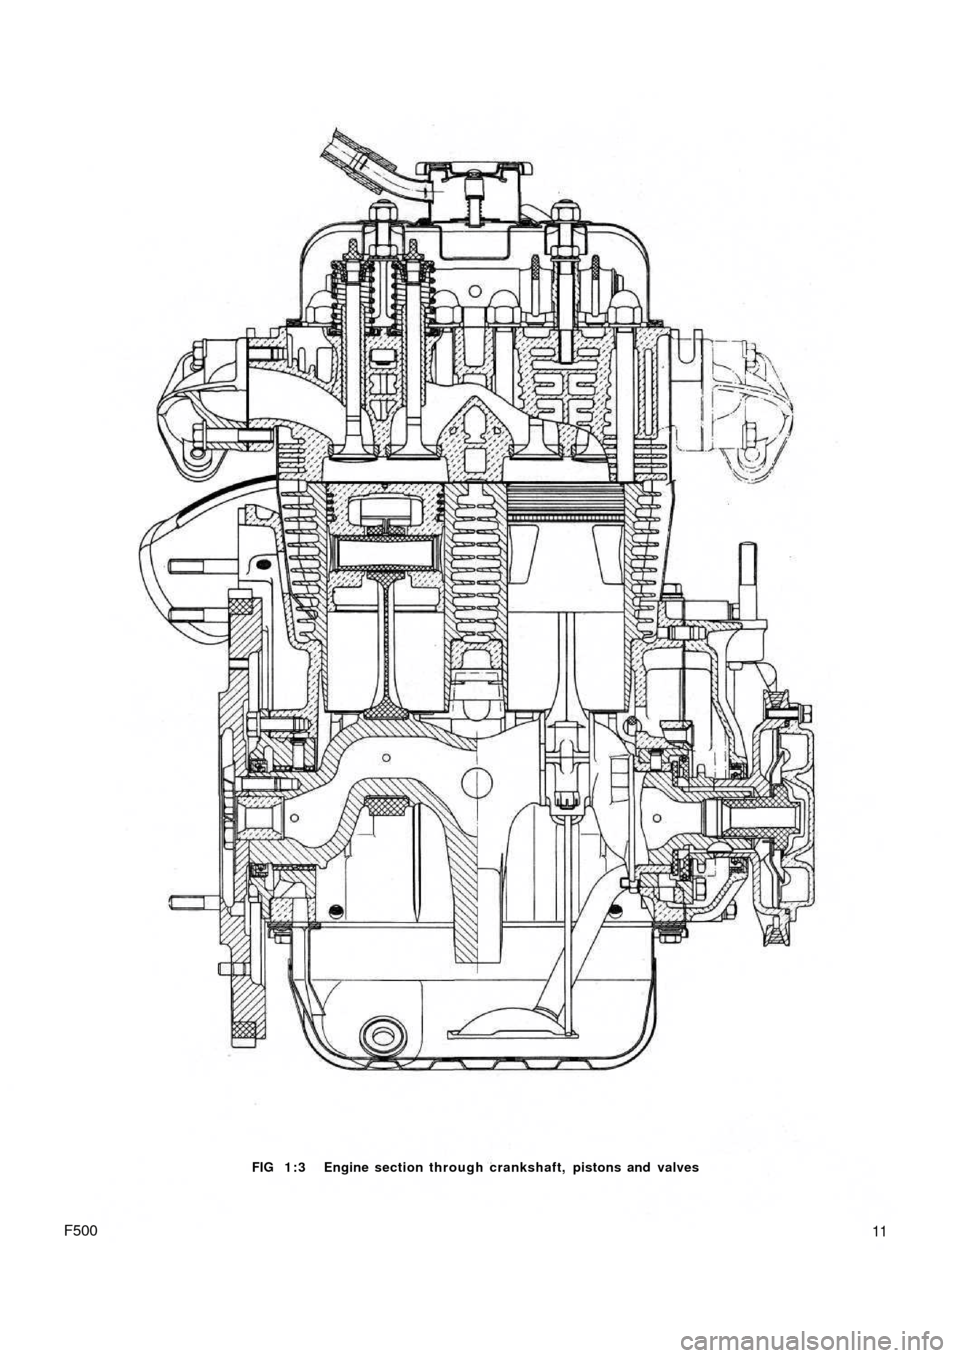 FIAT 500 1970 1.G Workshop Manual FIG 1 : 3  Engine section through crankshaft, pistons and  valves
F50011 